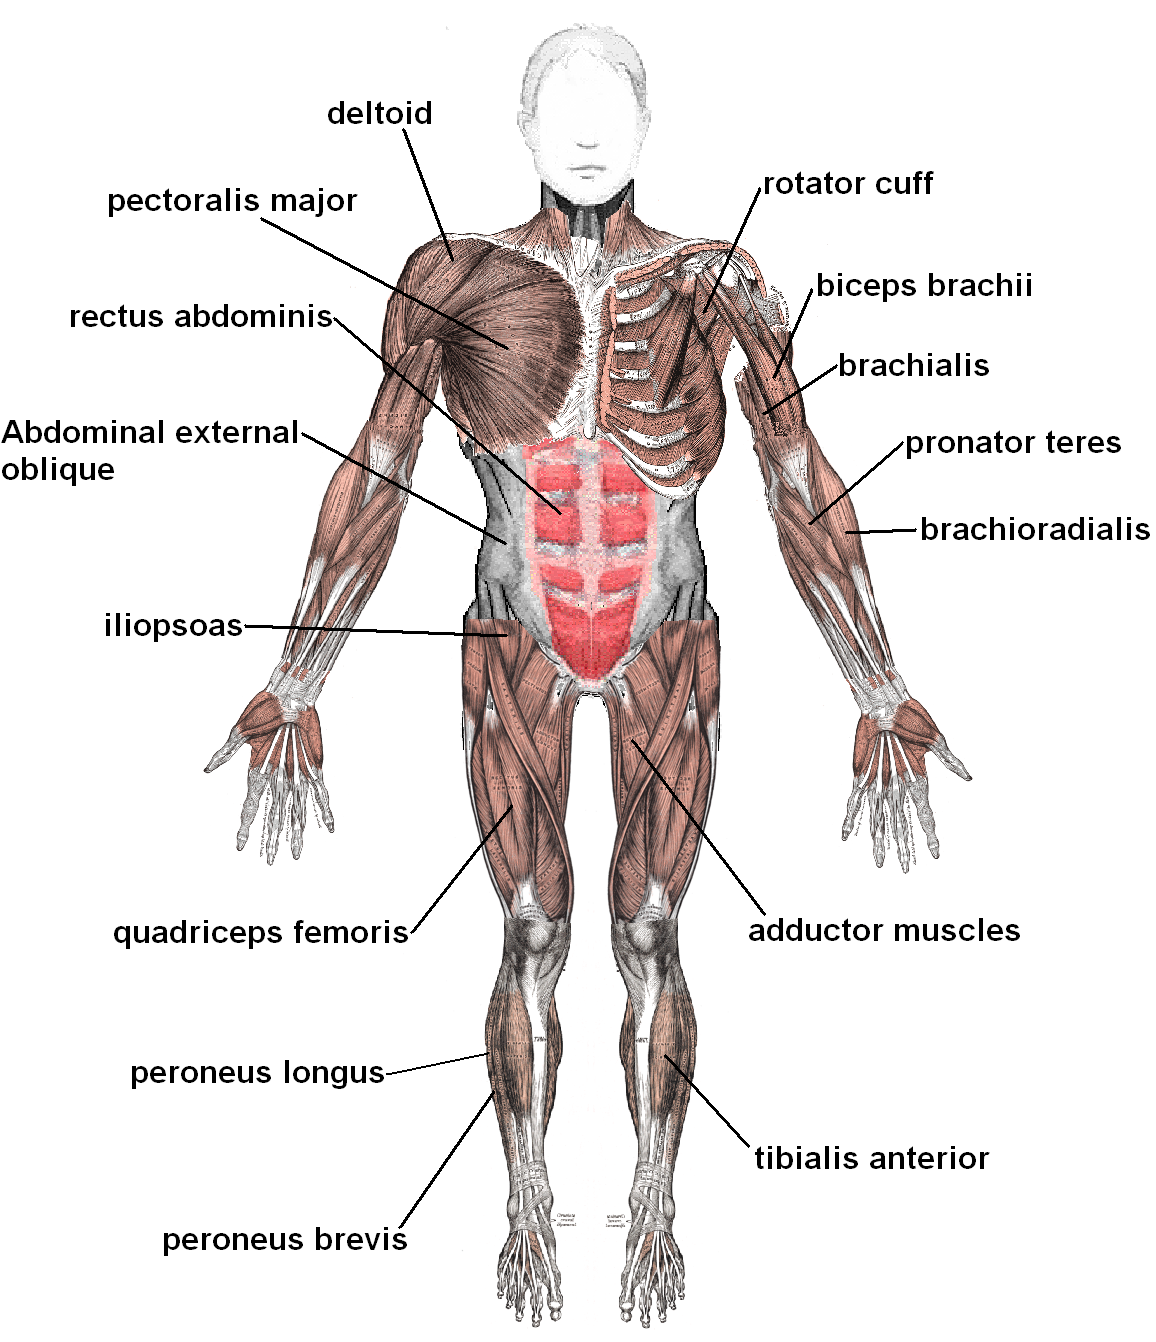 Abdominal external oblique muscle - Wikipedia